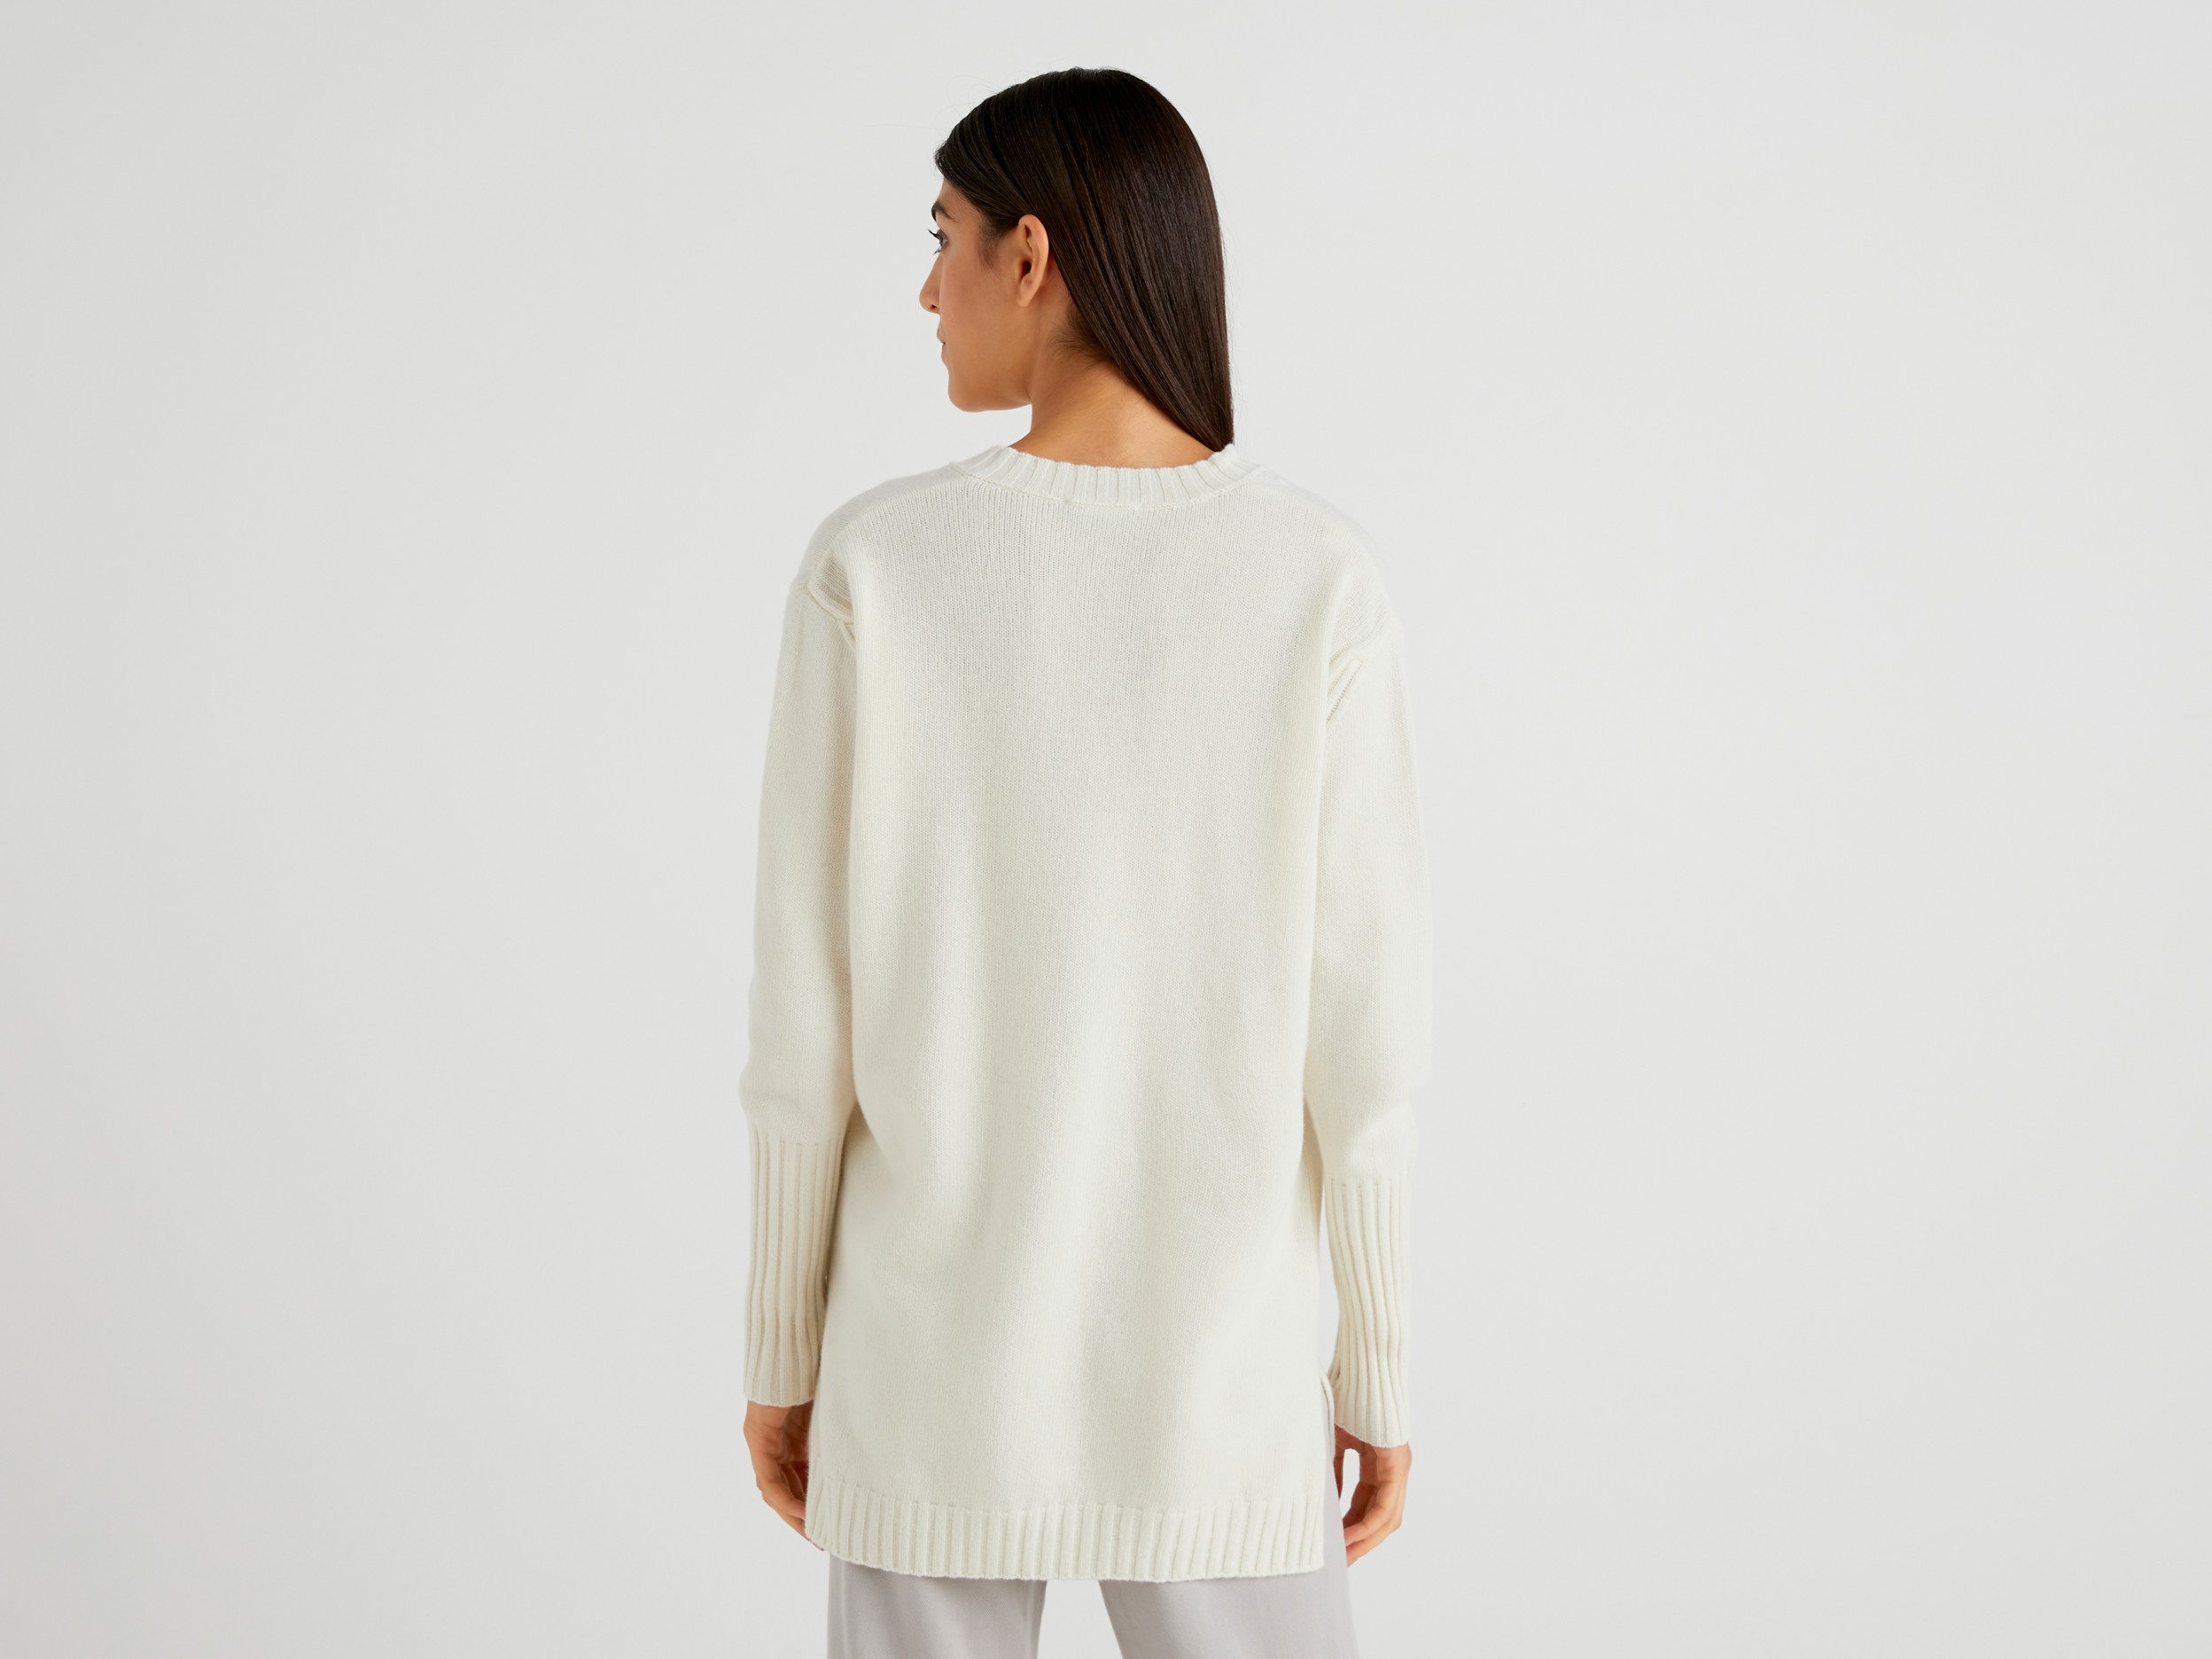 Benetton, V-Neck Sweater In Wool Blend, Taglia L-Xl, Creamy White, Women